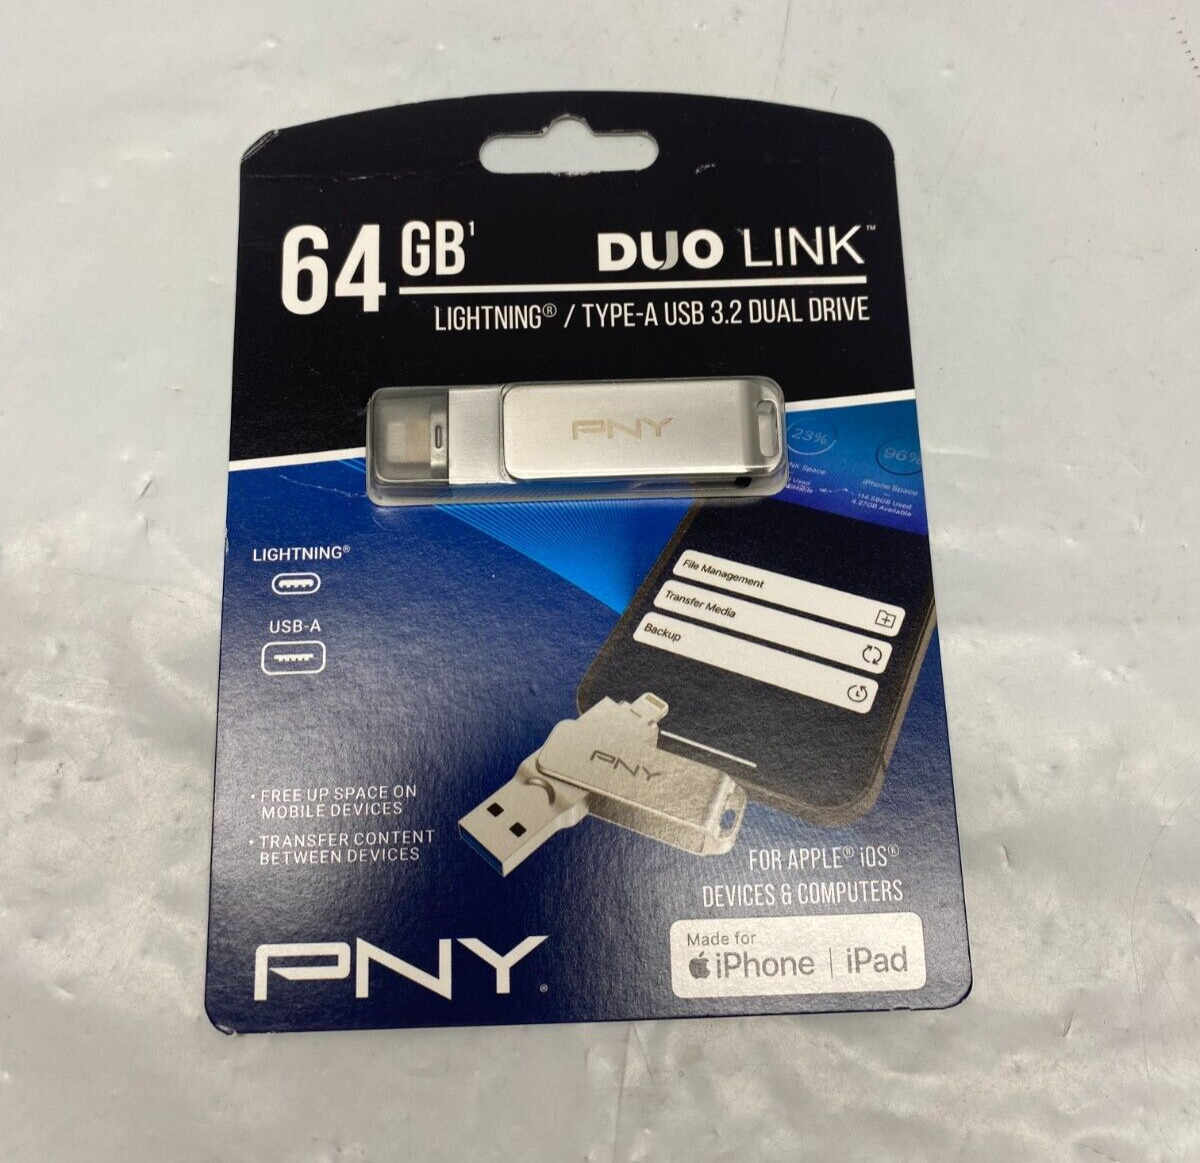 PNY 64GB DUO LINK iOS USB 3.2 Dual Flash Drive - P-FDI64GDULINKLGTWM-GE